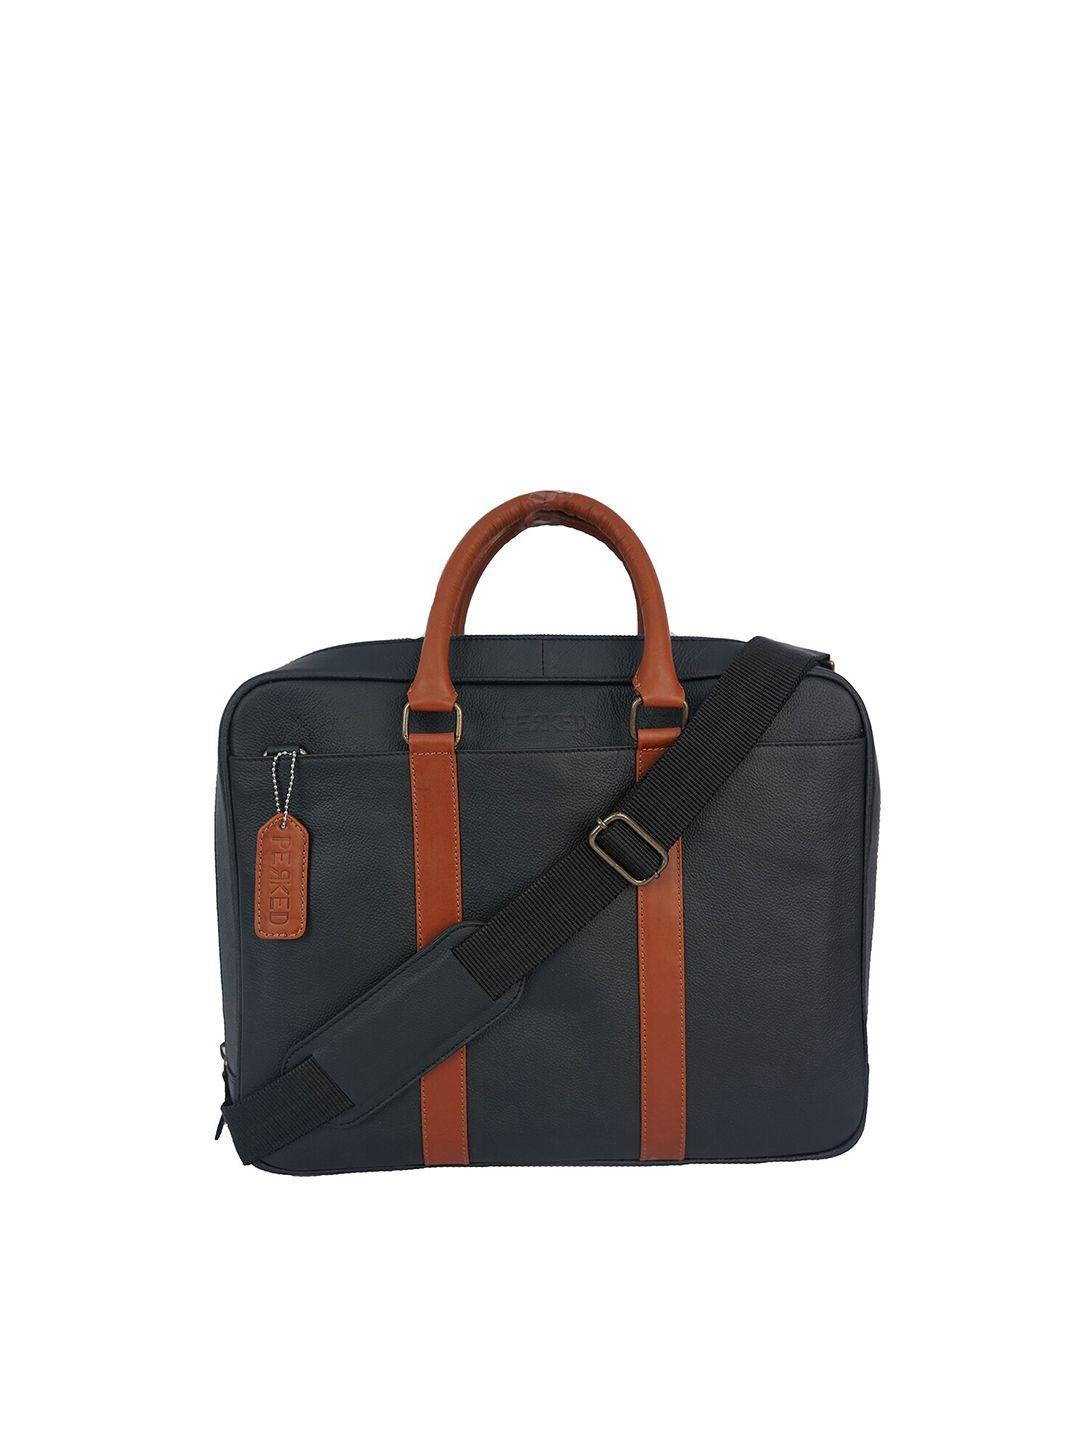 perked unisex black & brown 14 inch leather laptop bag